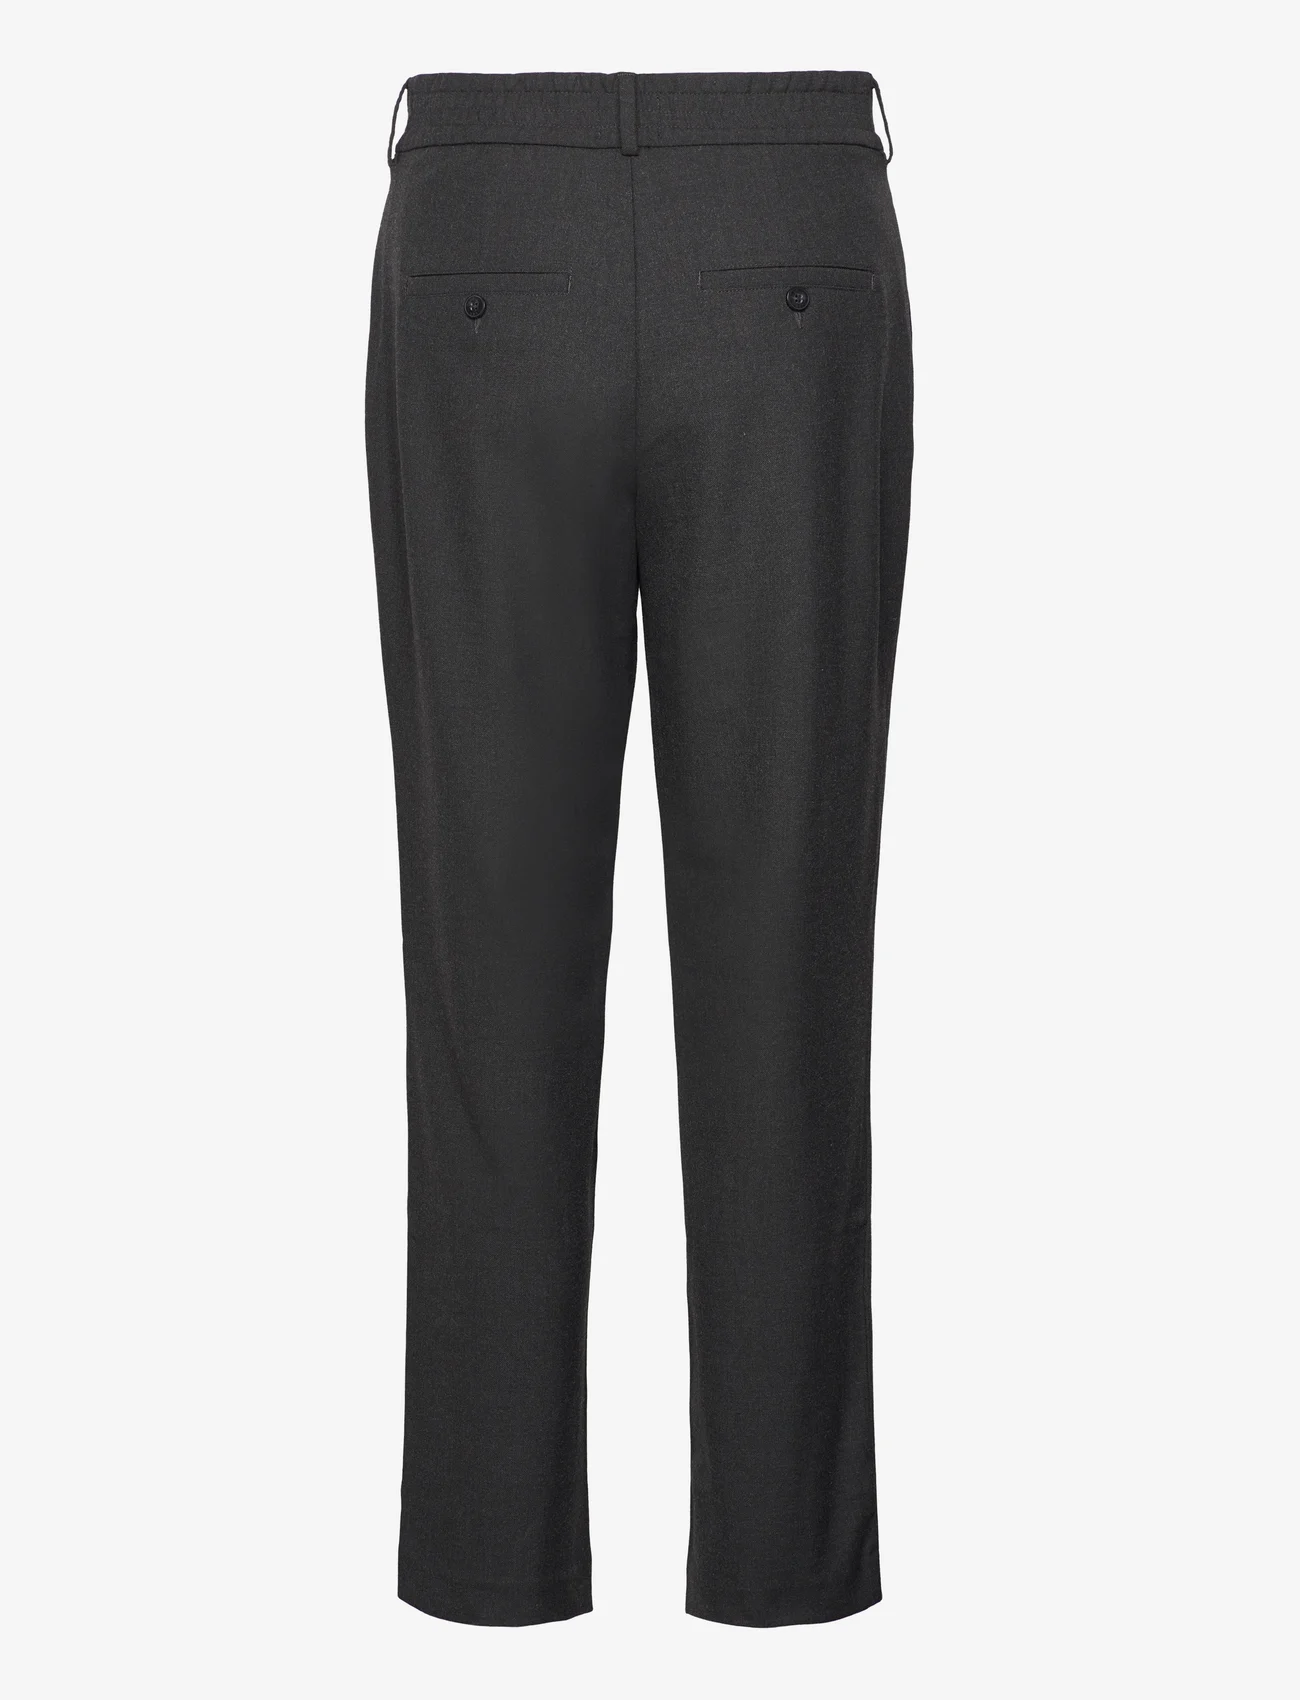 FIVEUNITS - Daphne - straight leg trousers - dark grey melange - 1